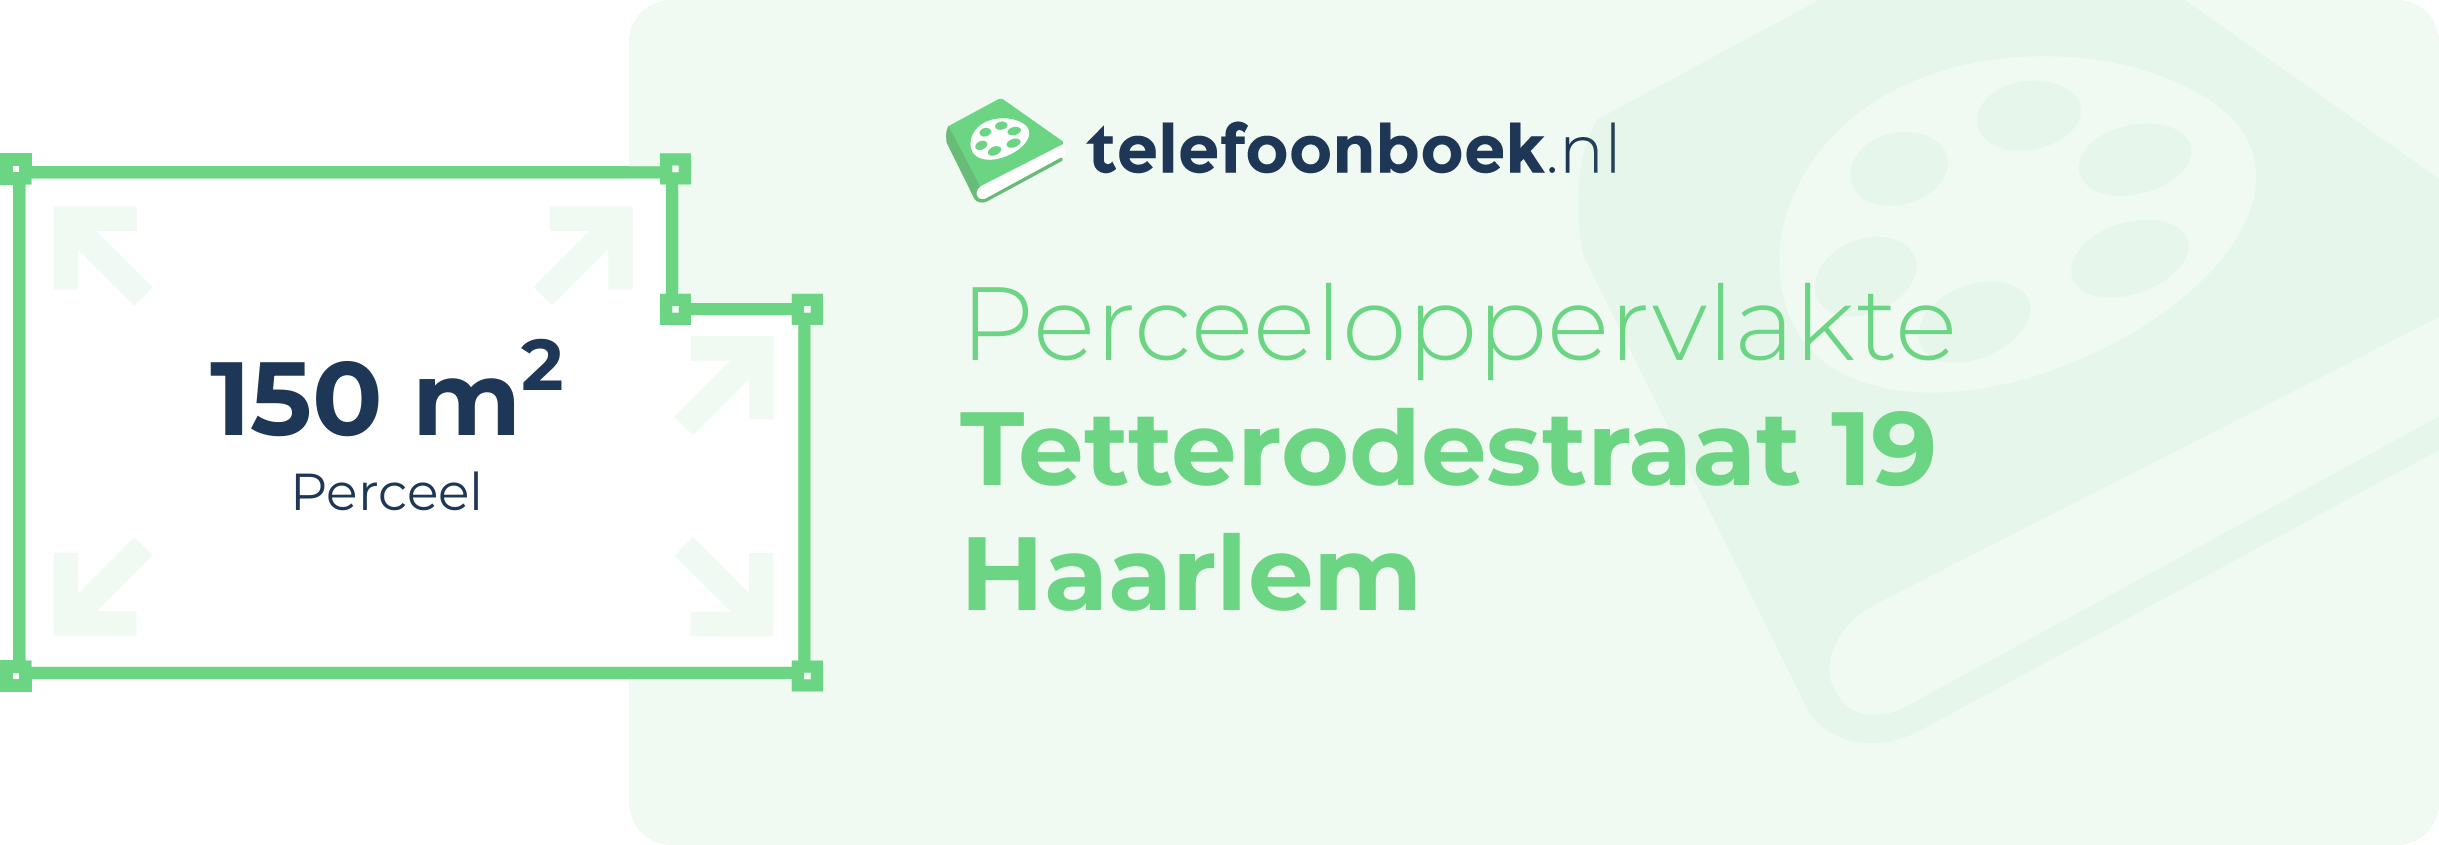 Perceeloppervlakte Tetterodestraat 19 Haarlem